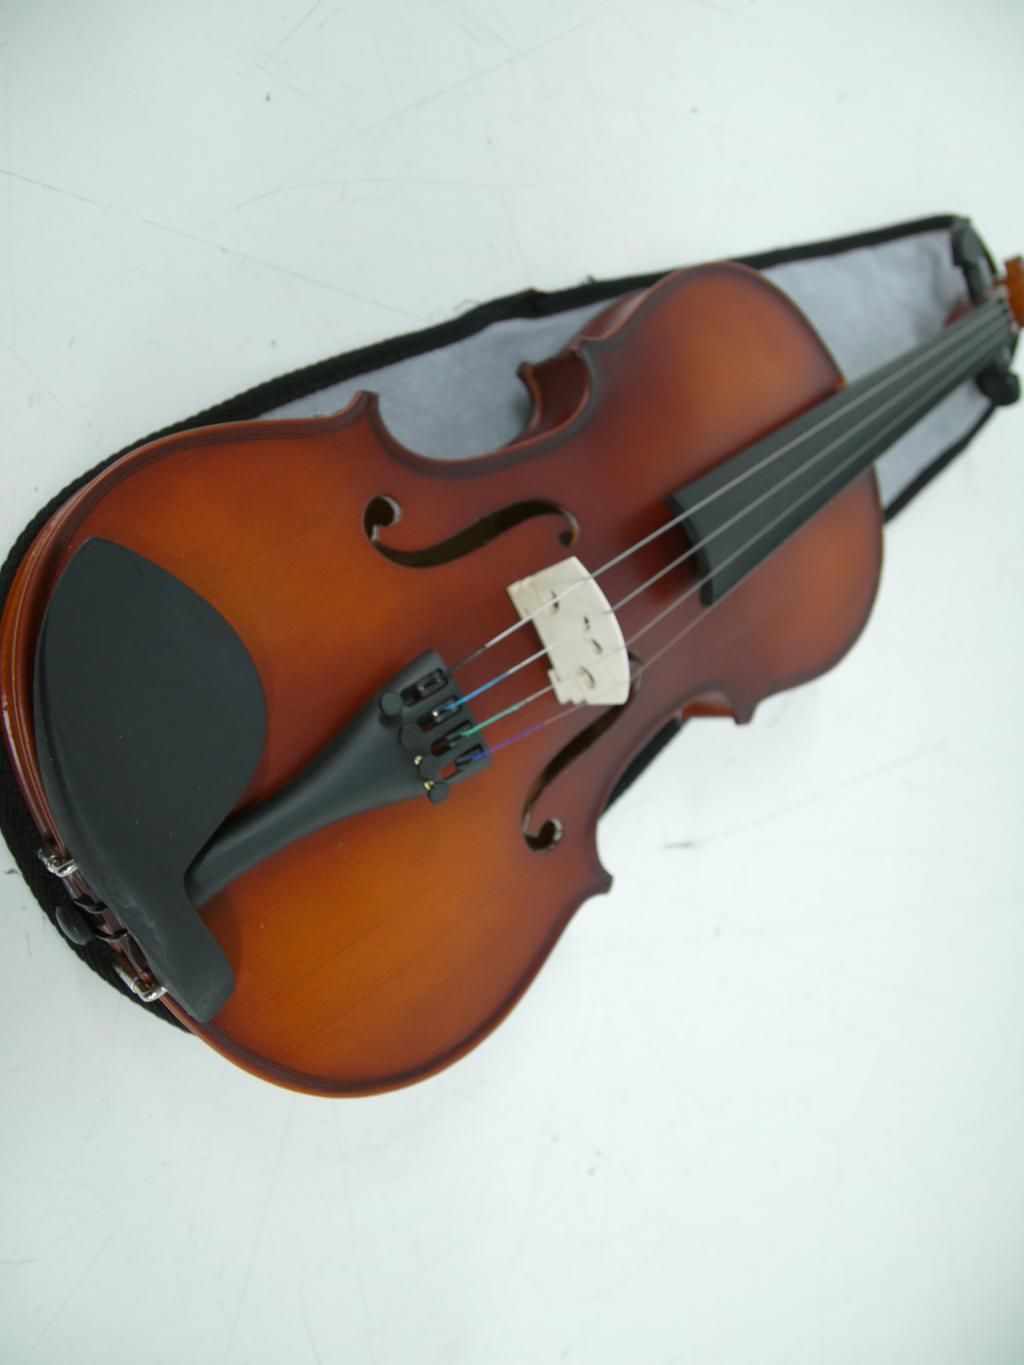 Mendini 4 4 MV300 Solid Wood Violin in Satin Finish with Hard Case